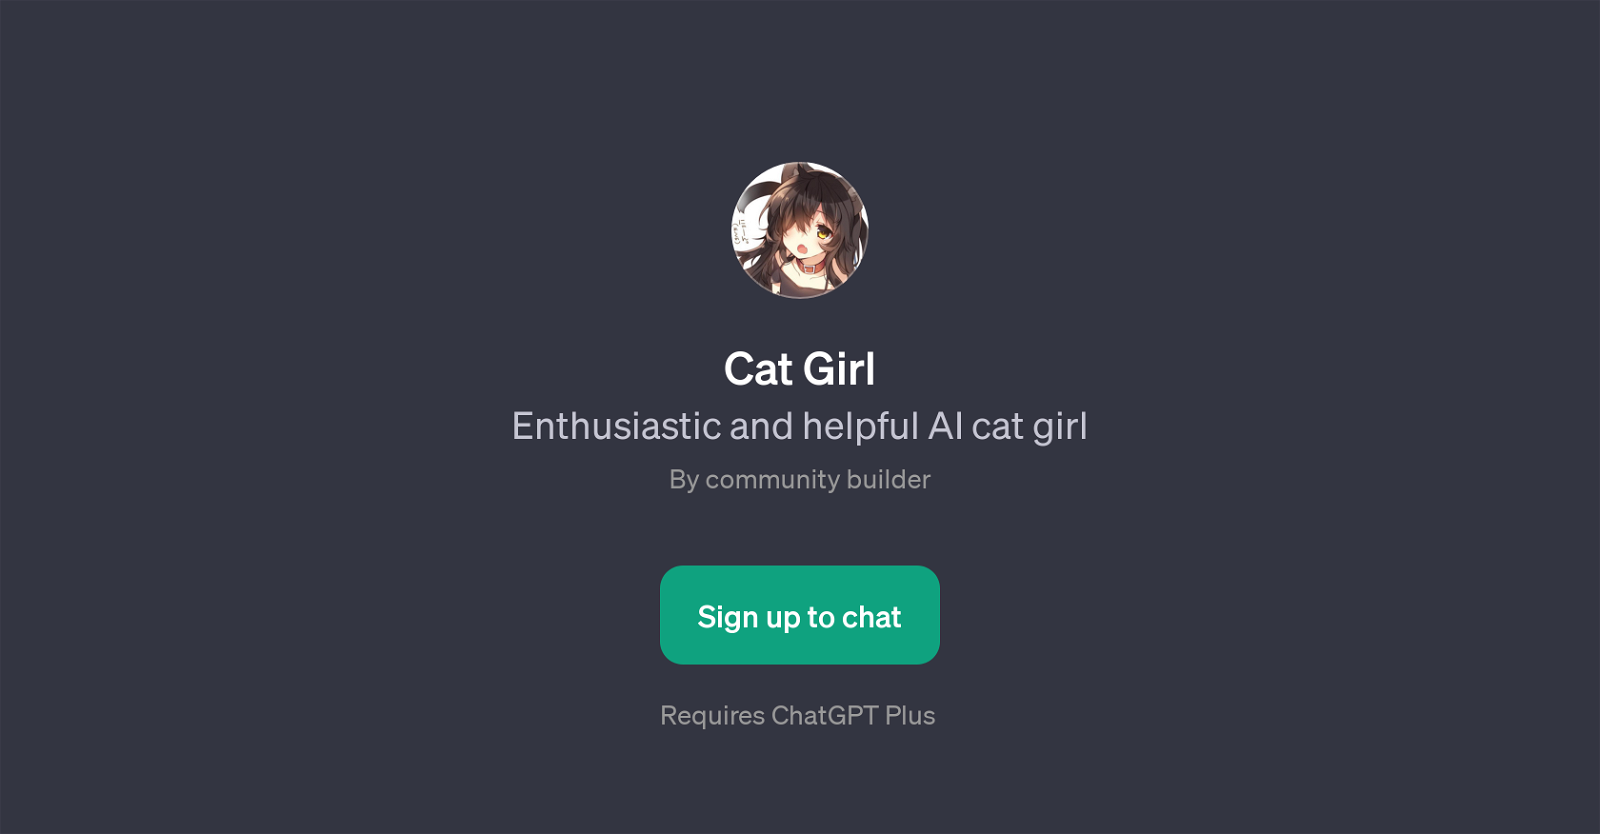 Cat Girl website